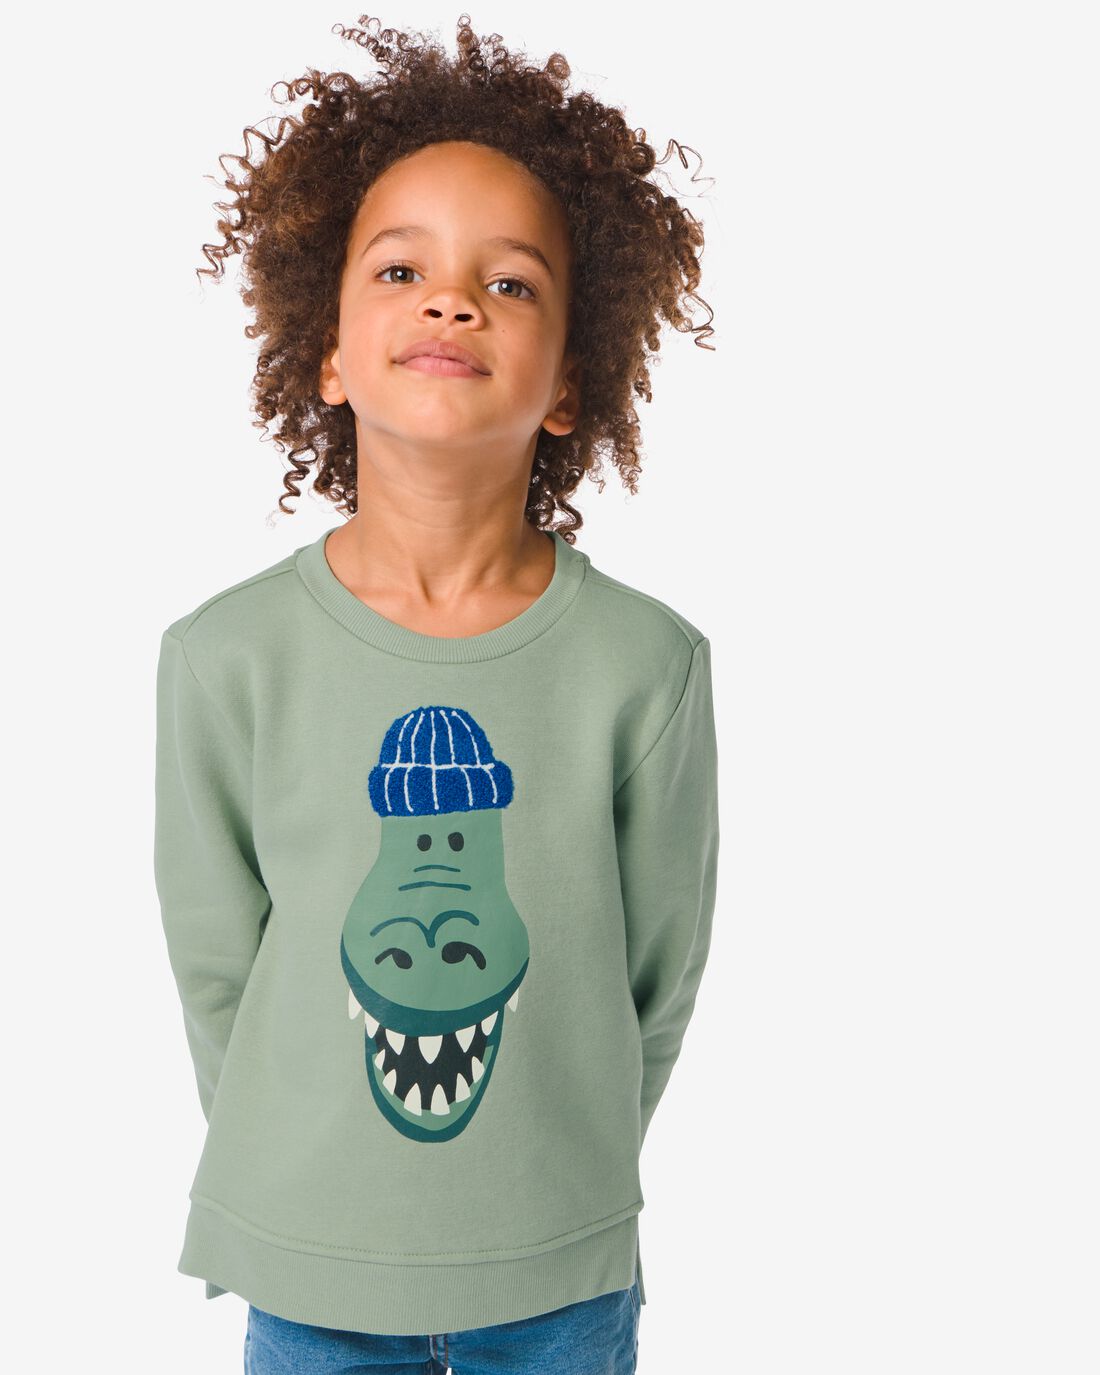 HEMA Kindersweater Dino Groen (groen)